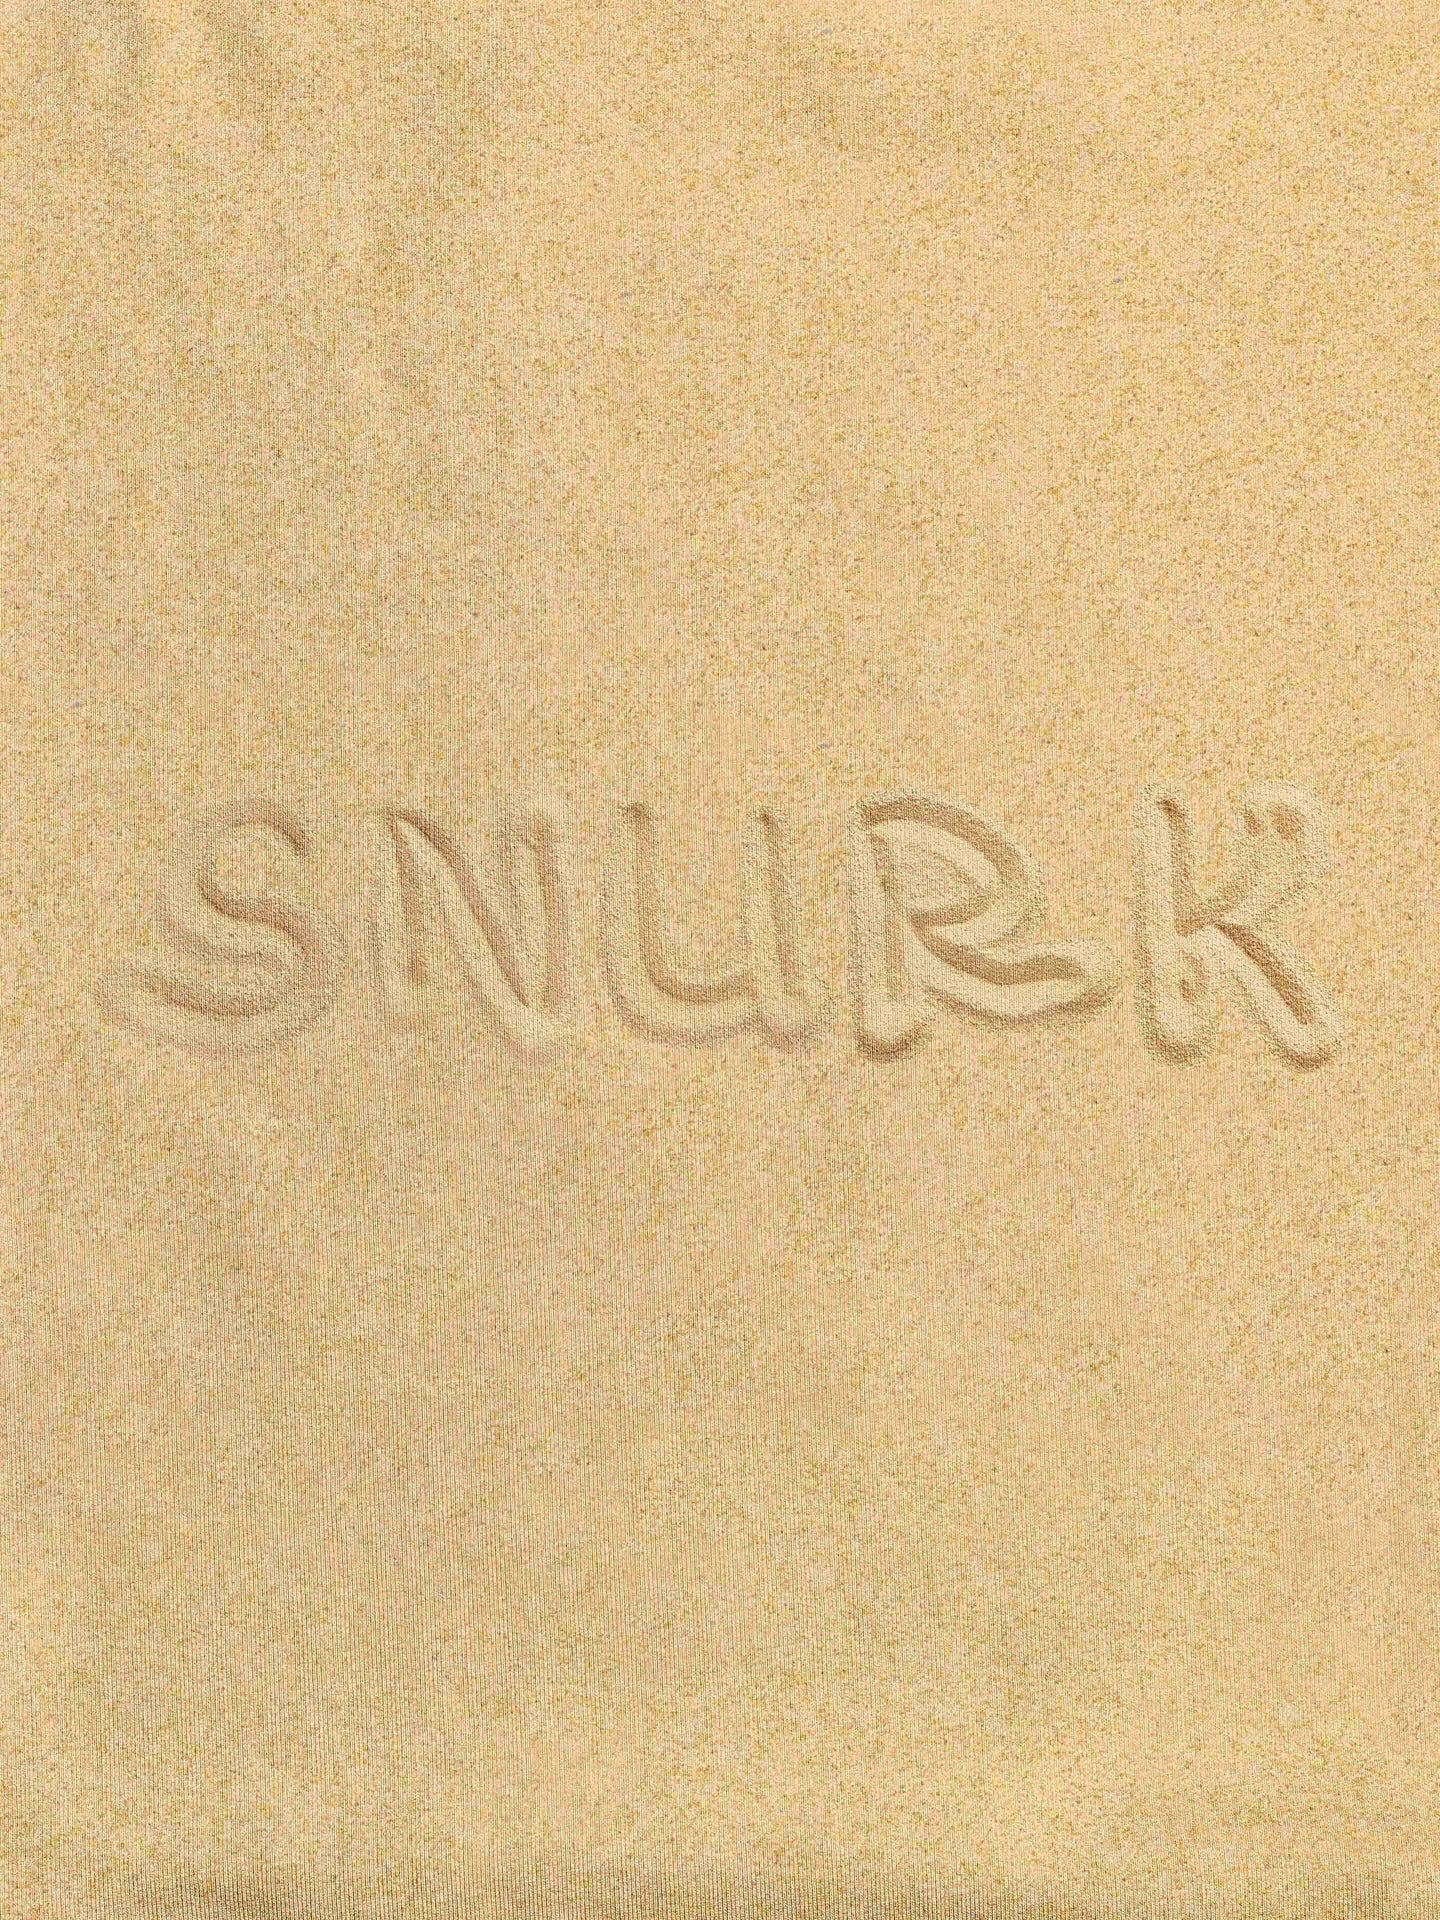 Sandy Beach T-shirt Unisex - SNURK